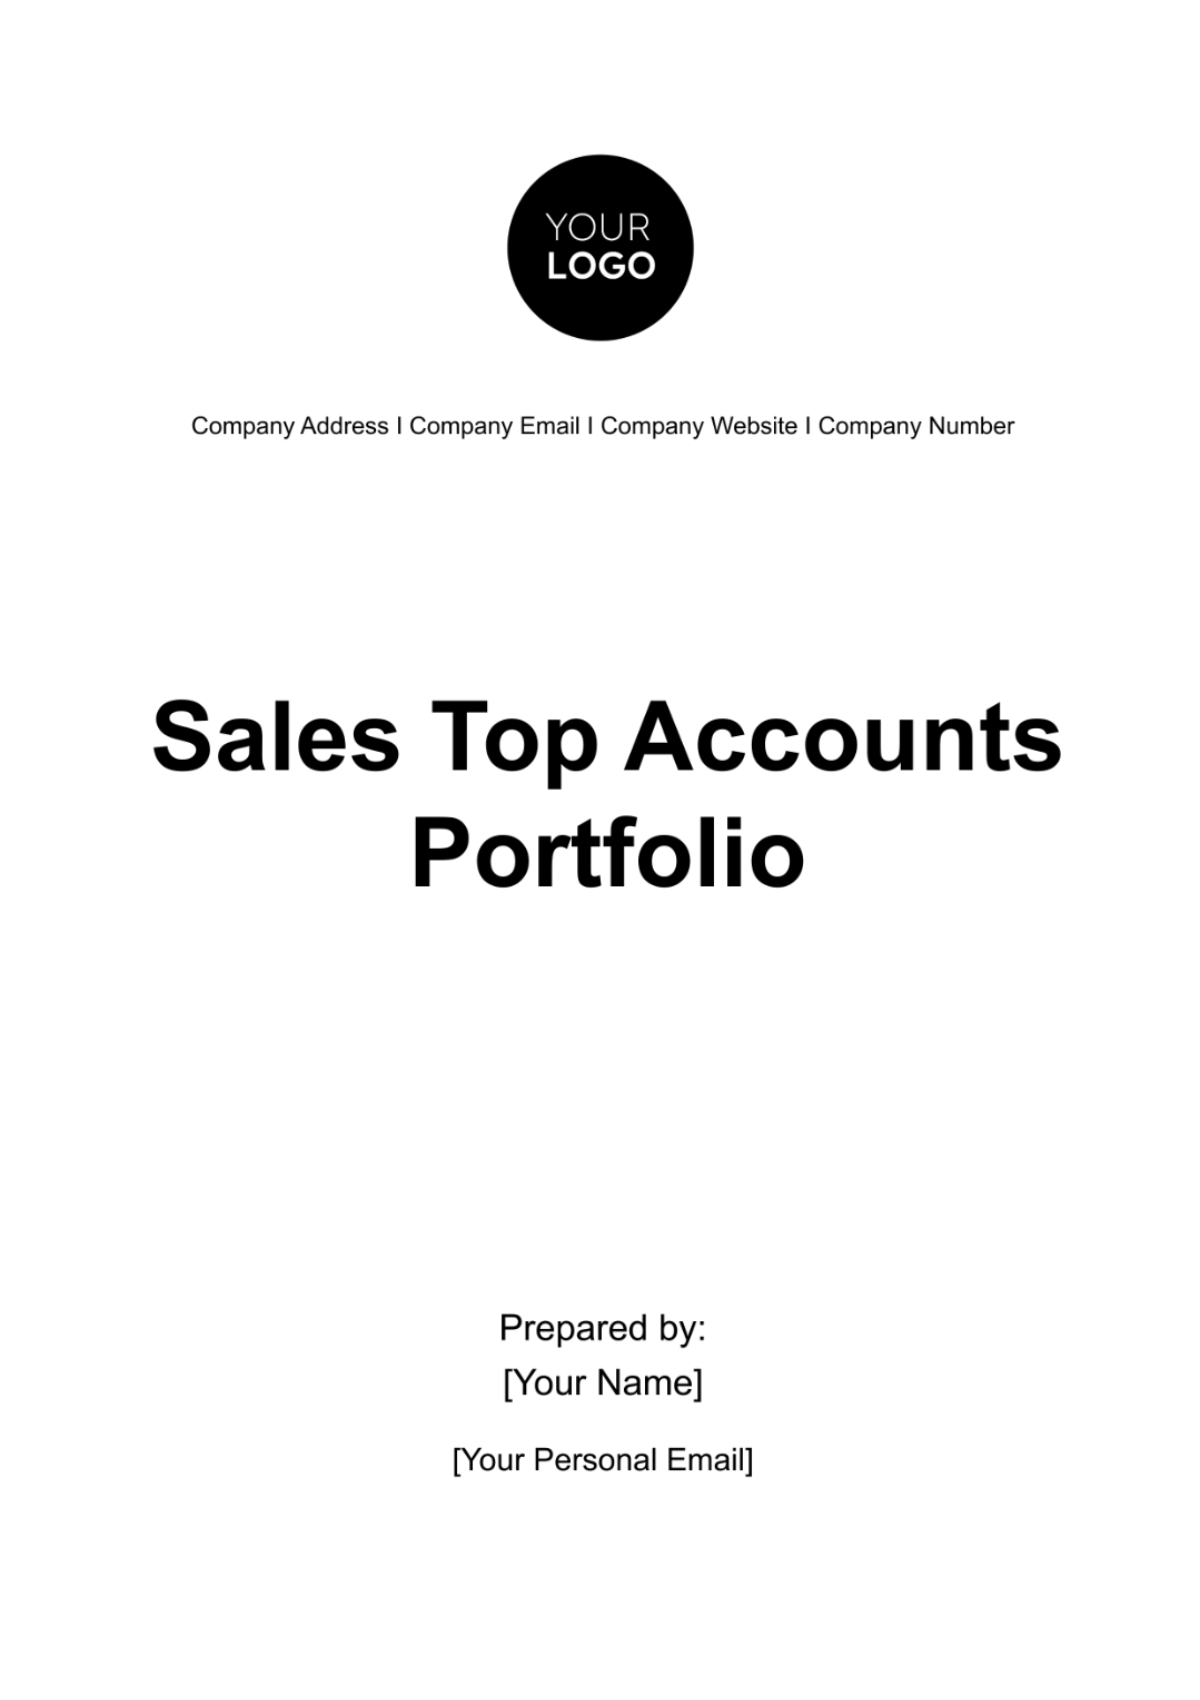 Sales Top Accounts Portfolio Template